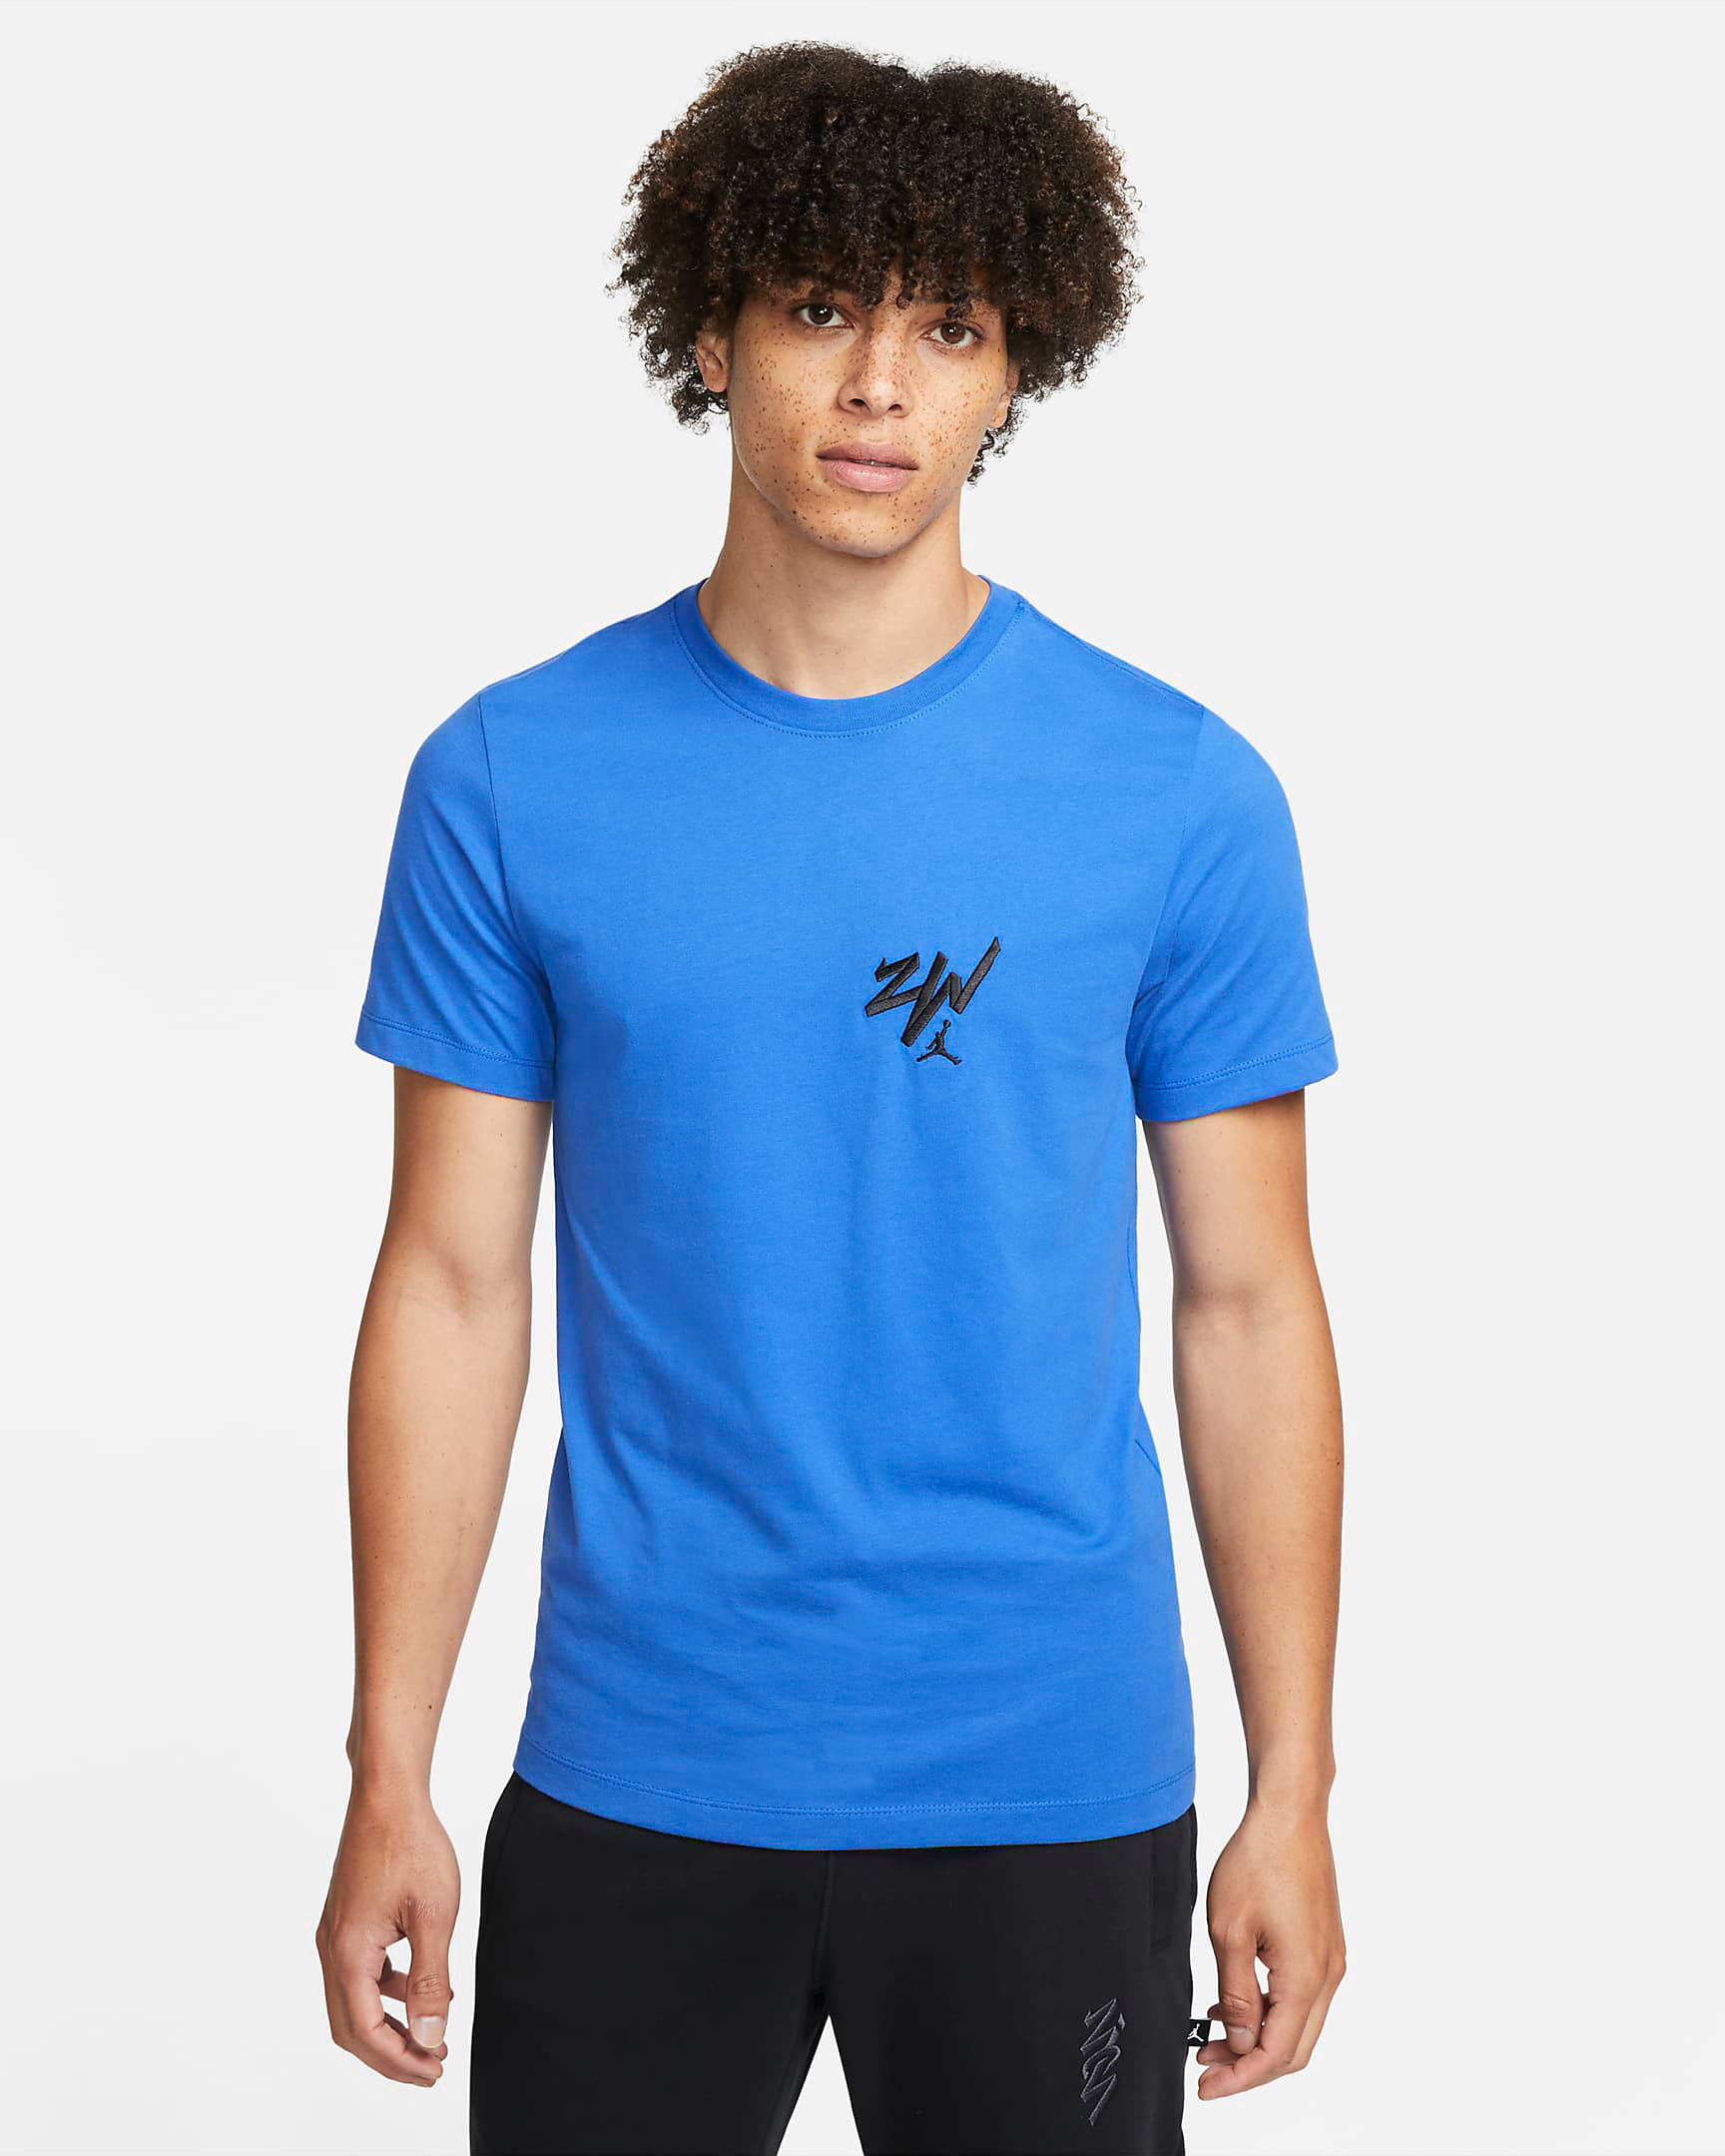 jordan-zion-shirt-royal-blue-black